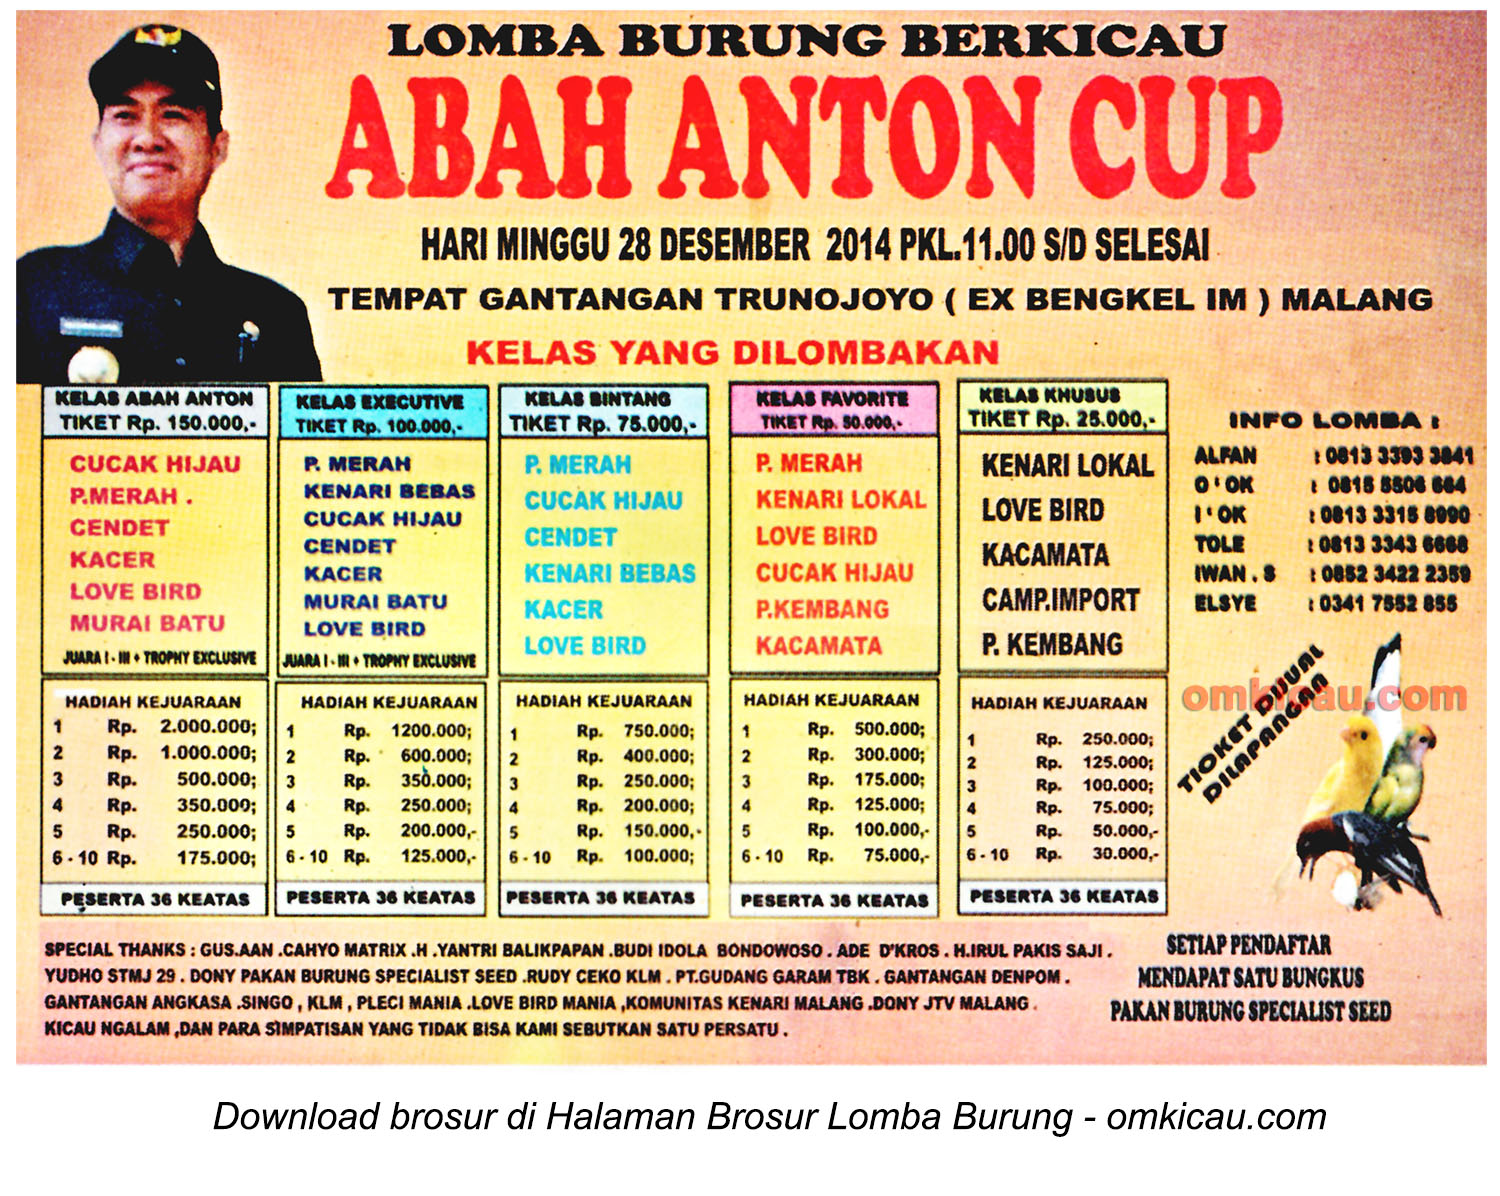 Brosur Lomba Burung Berkicau Abah Anton Cup, Malang, 28 Desember 2014